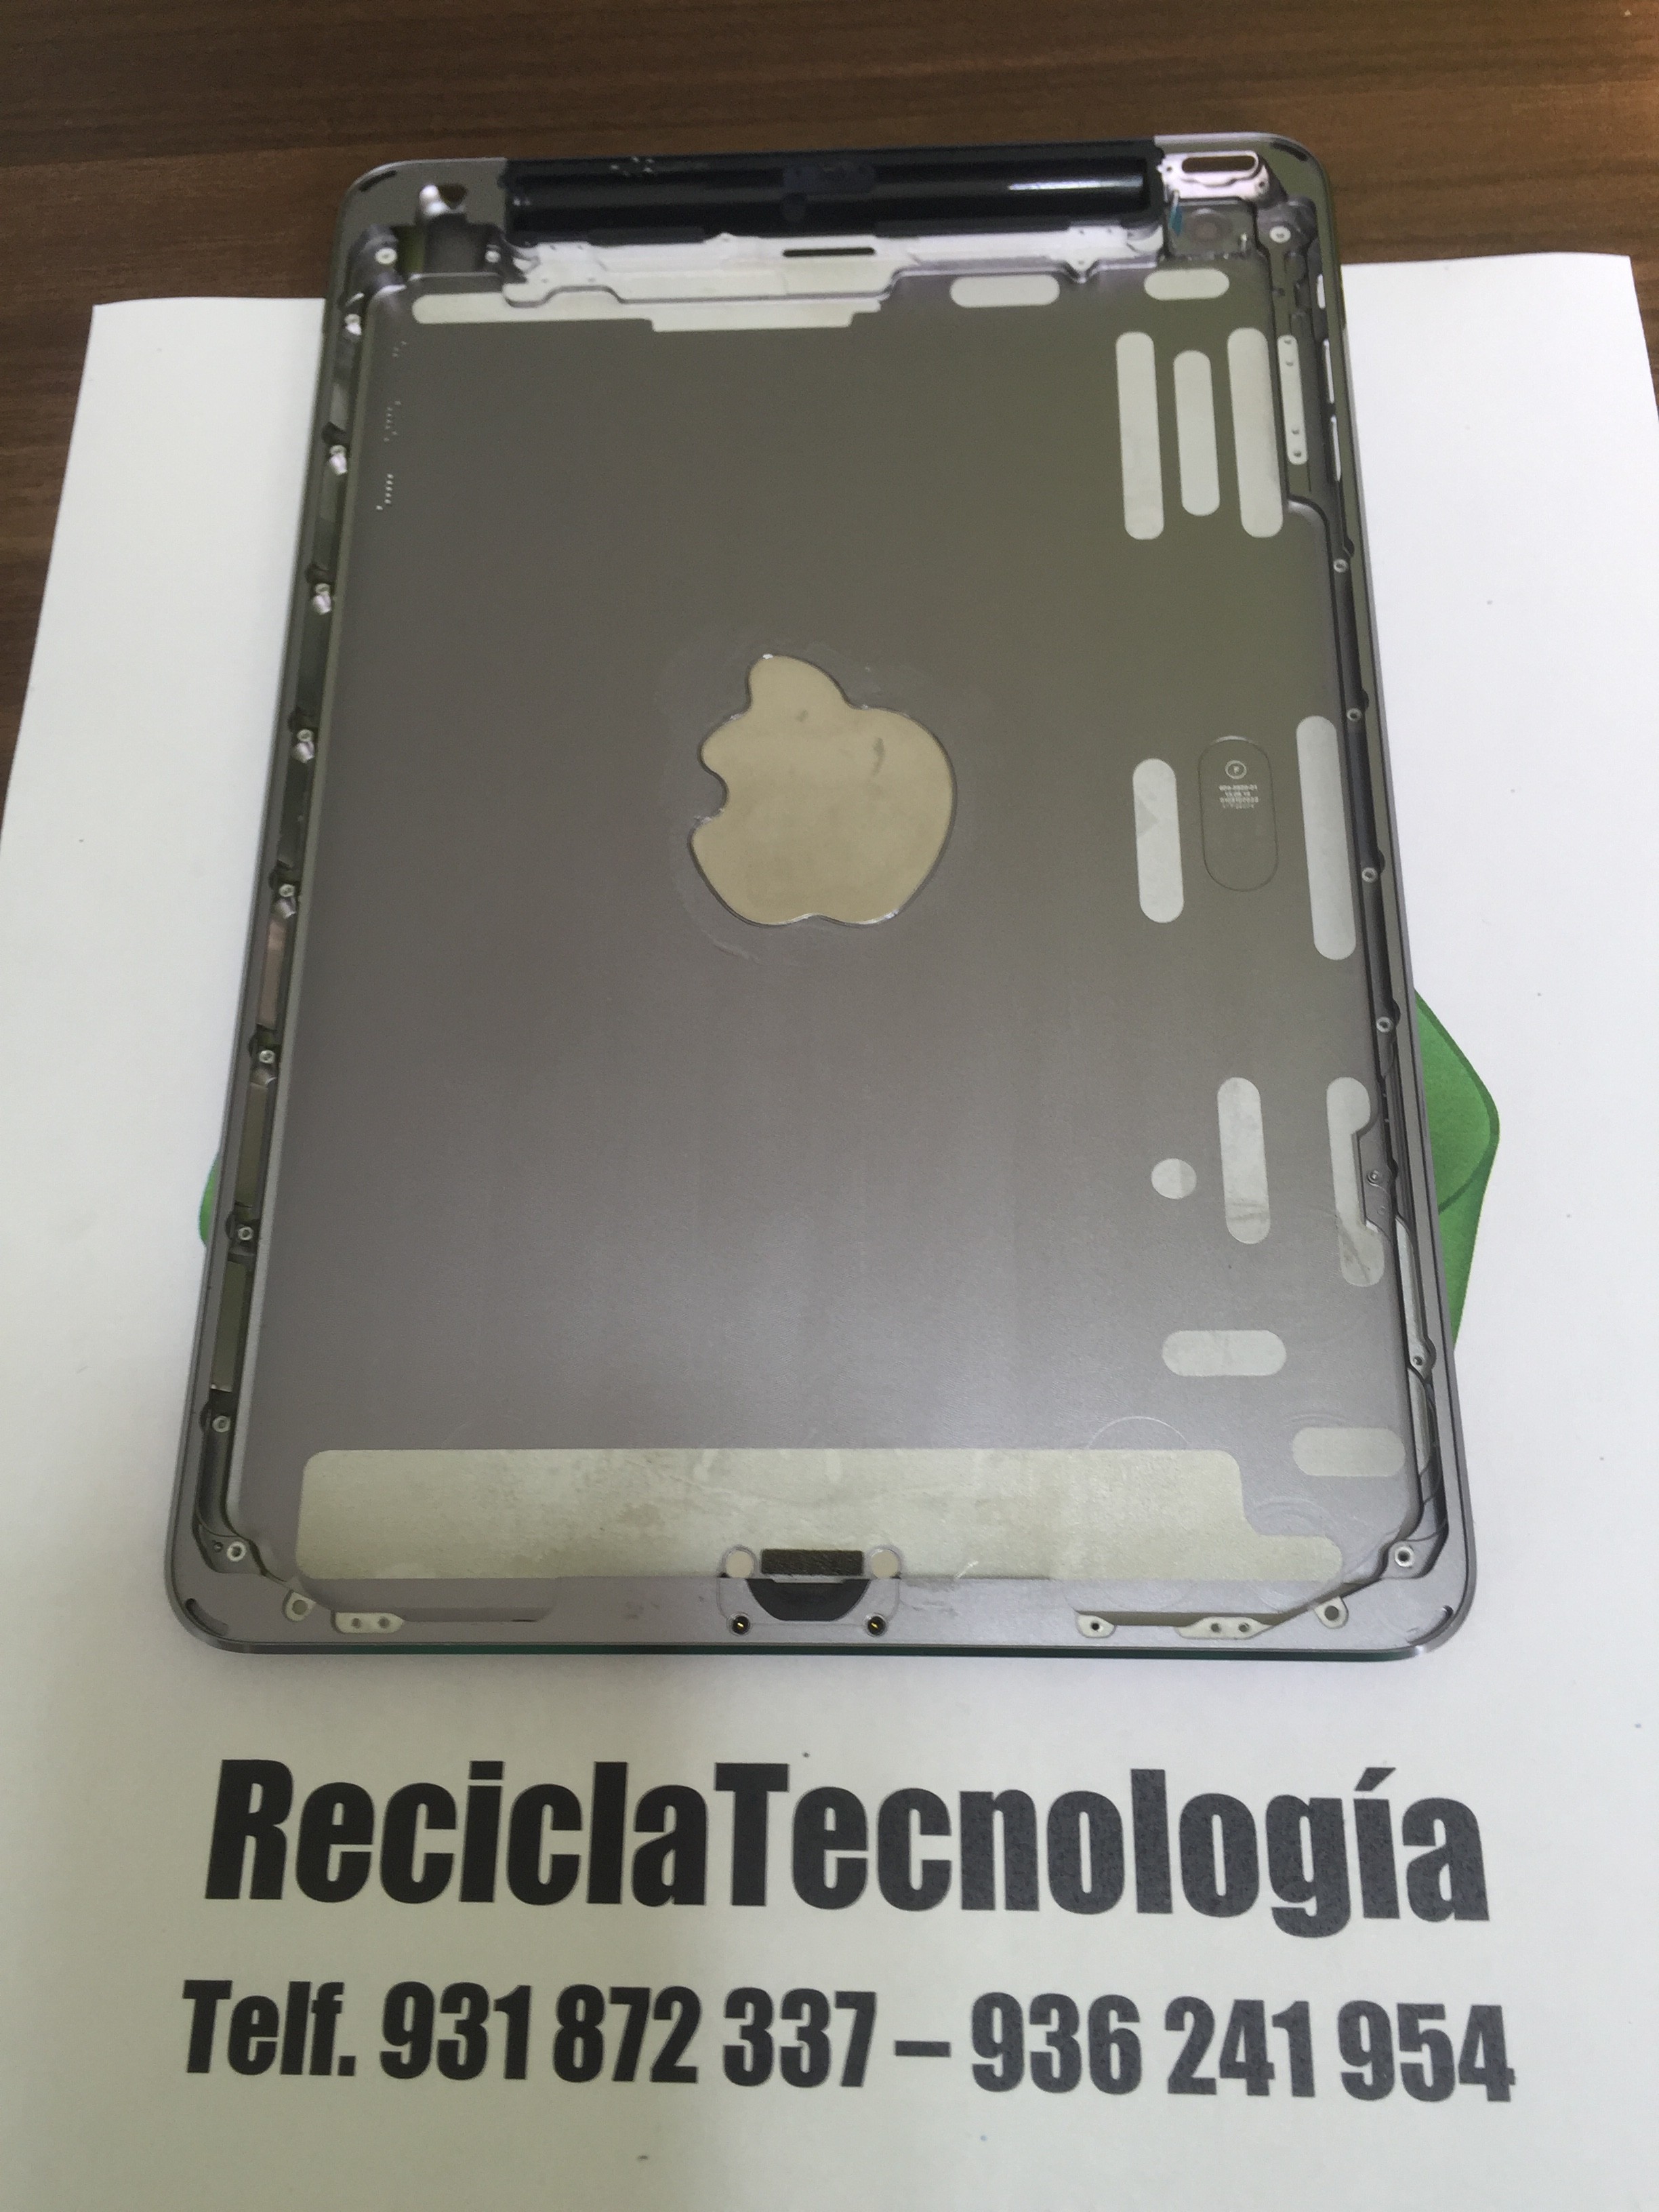 Cargador para iPad Original 12w A1401 OEM - ReciclaTecnologia